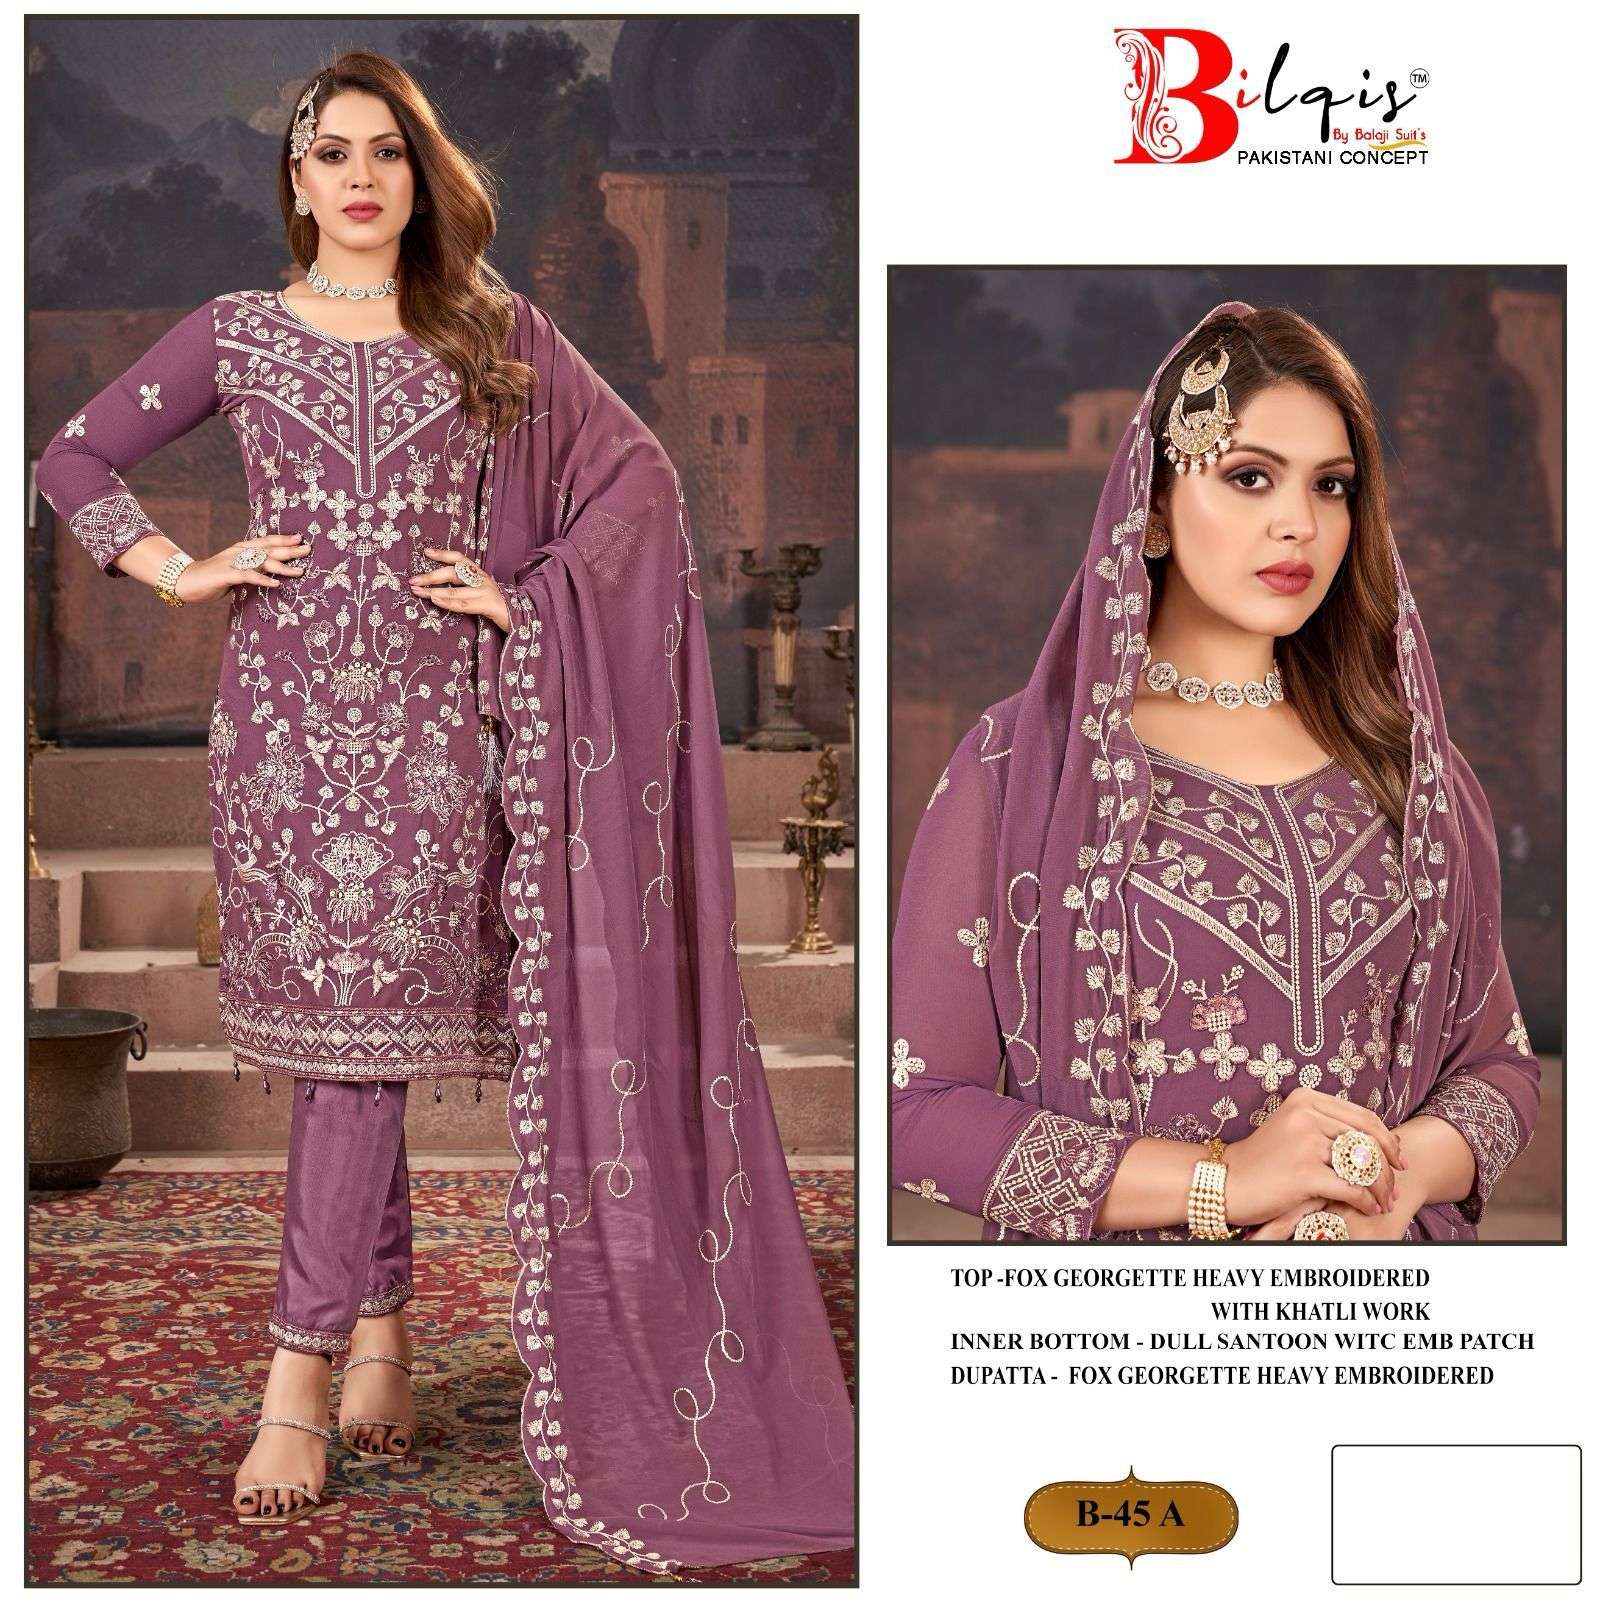 Bilqis B 45 Colors Designer Work Pakistani Dress New Collection